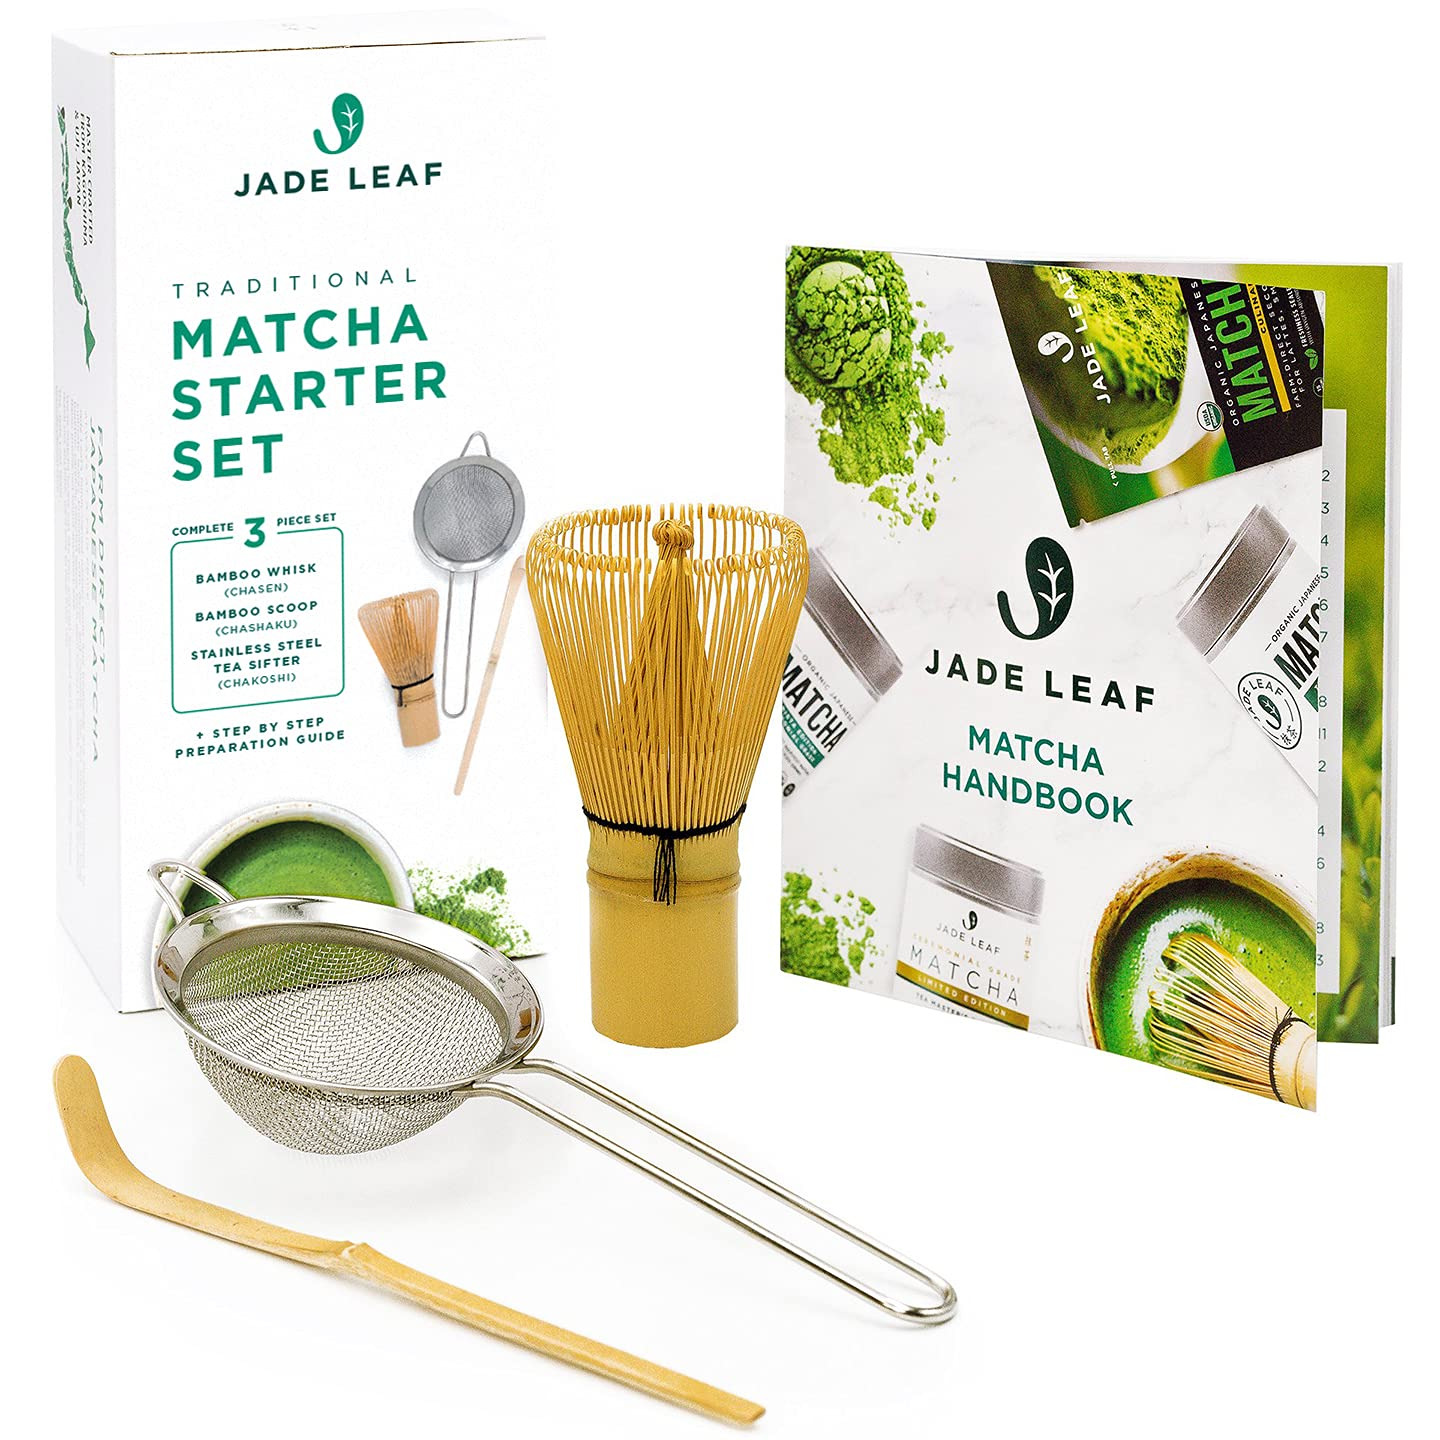 Jade Leaf Traditional Matcha Starter Set - Bamboo Matcha Whisk (Chasen), Scoop (